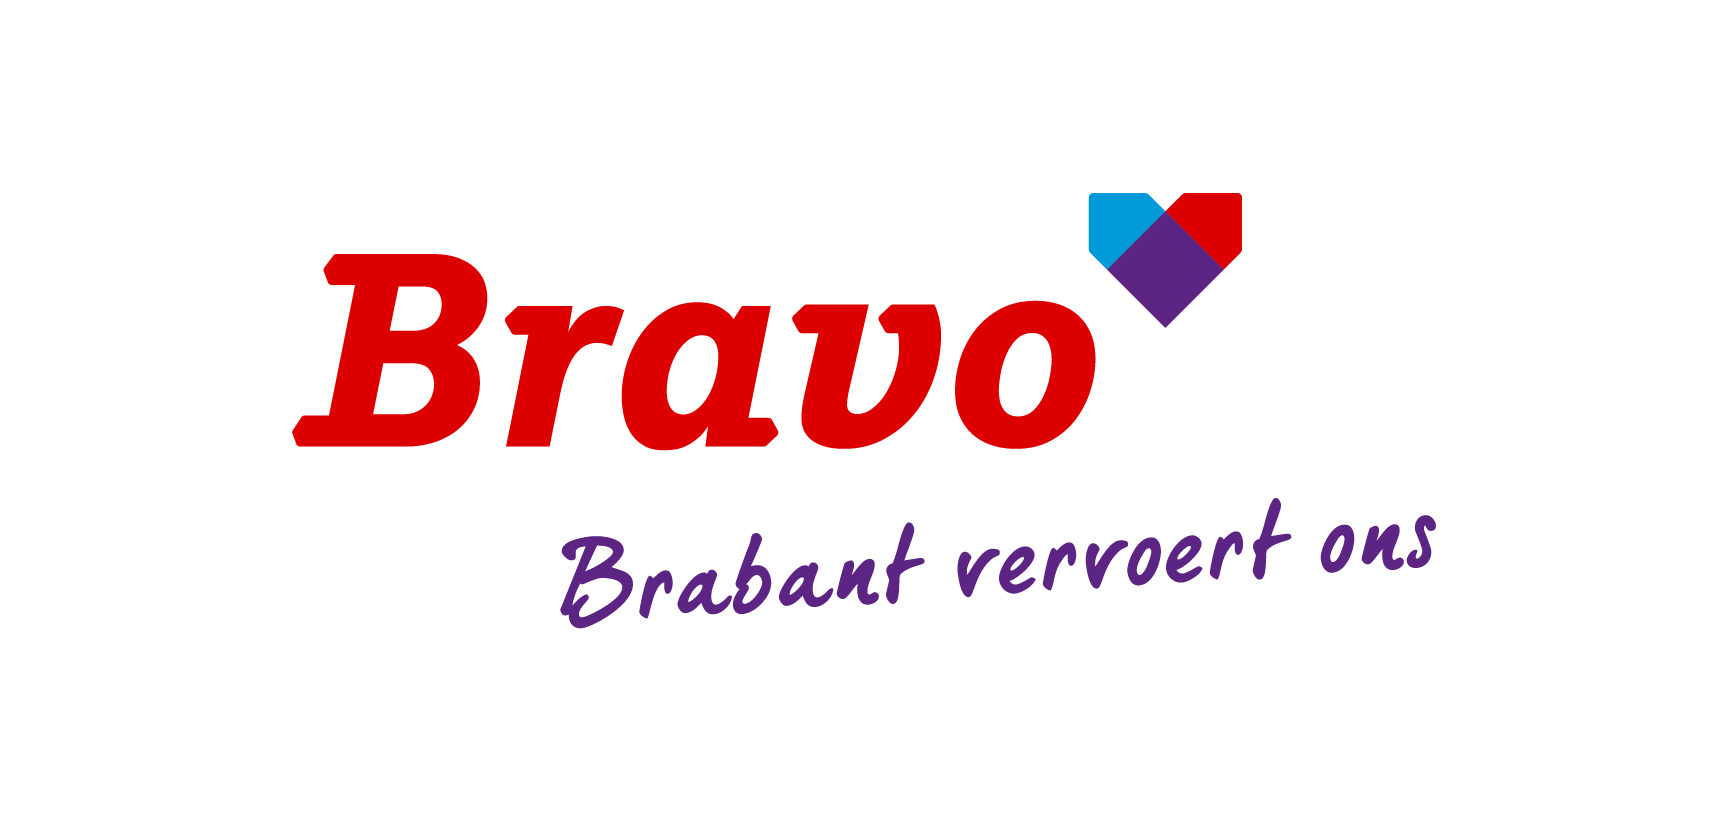 Bravo Brabant vervoert ons